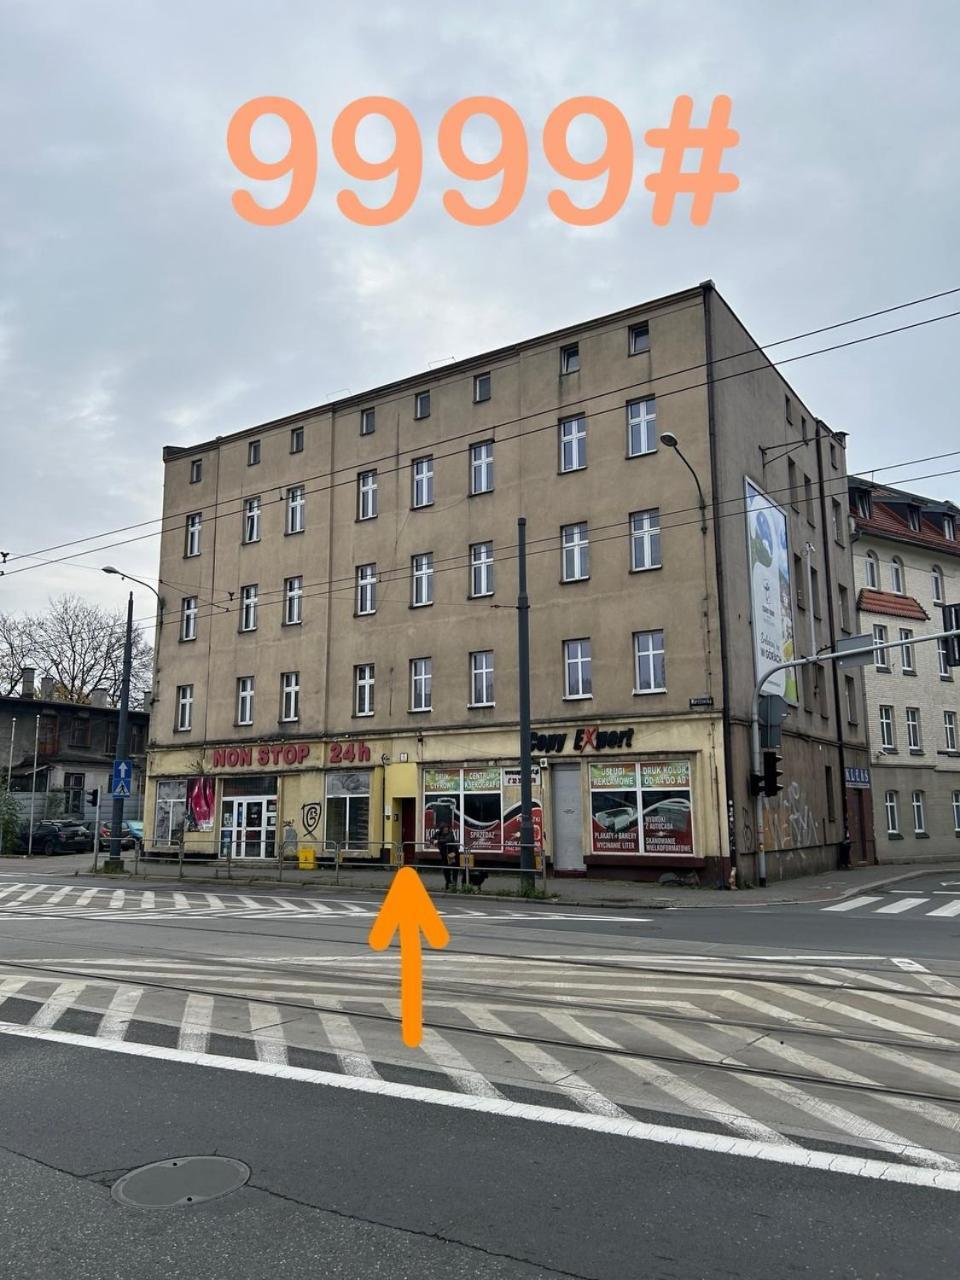 Yellow Hostel 24H - Sniadanie I Obiad Gratis - Free Parking Katowice Kültér fotó